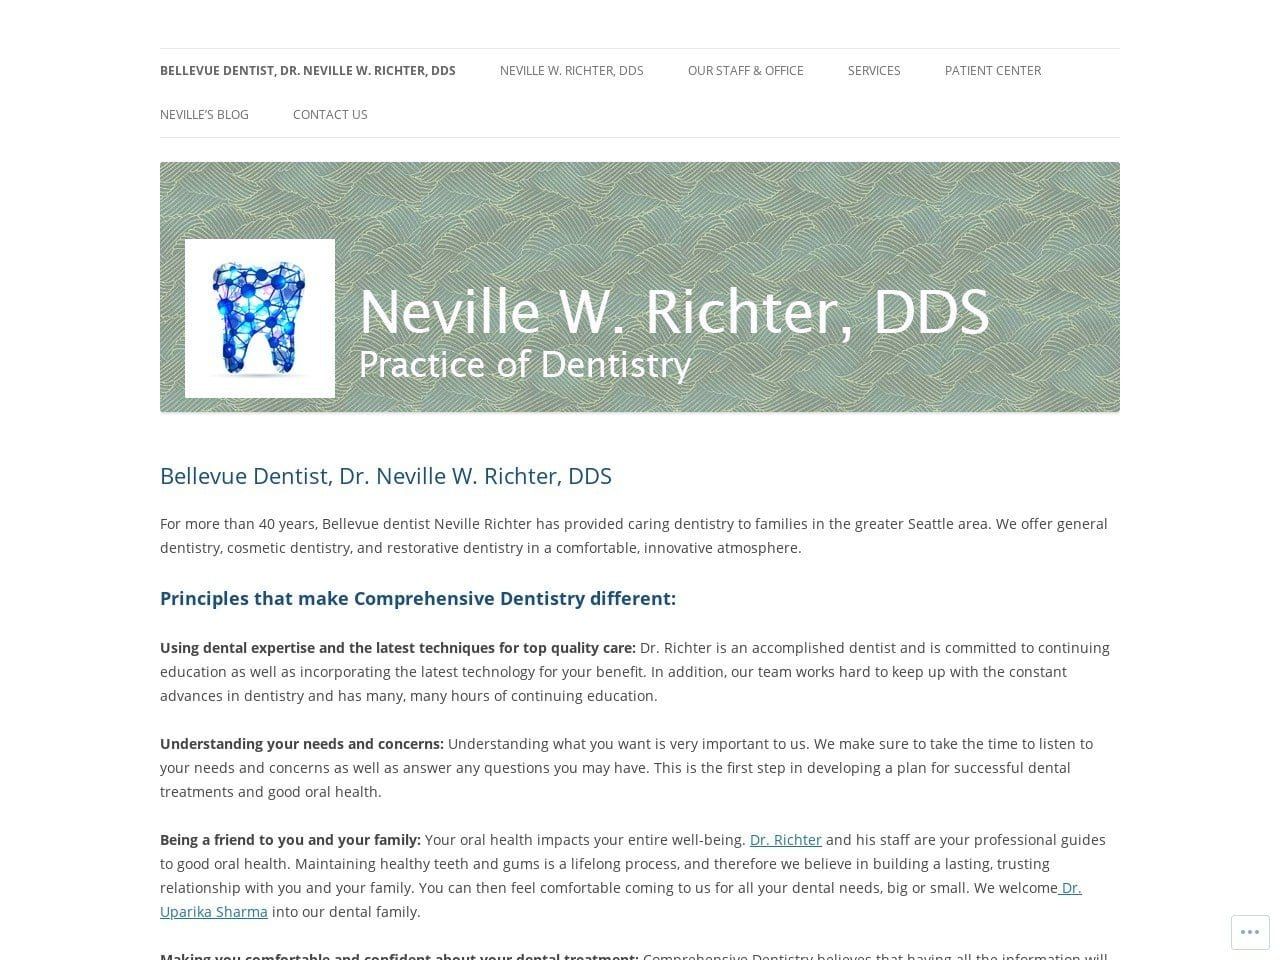 Neville W. Richter D.D.S. Website Screenshot from whatagreatsmile.com